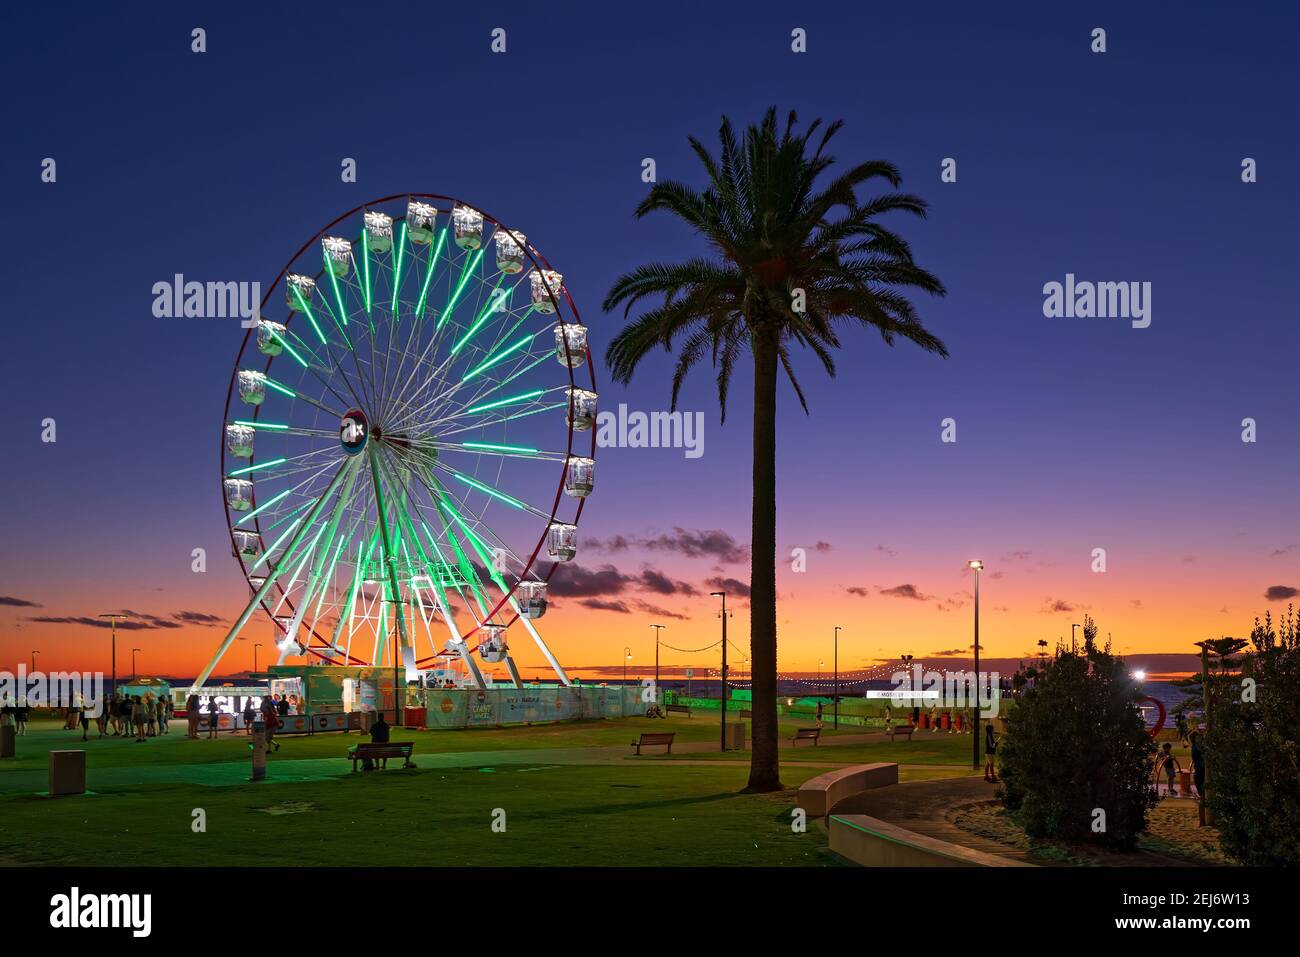 Adelaide, South Australia - February 22, 2021: Glenelg Mix102.3 Giant Ferris Wheel at Moseley Square illuminated at dusk viewed towards the jetty. Stock Photo